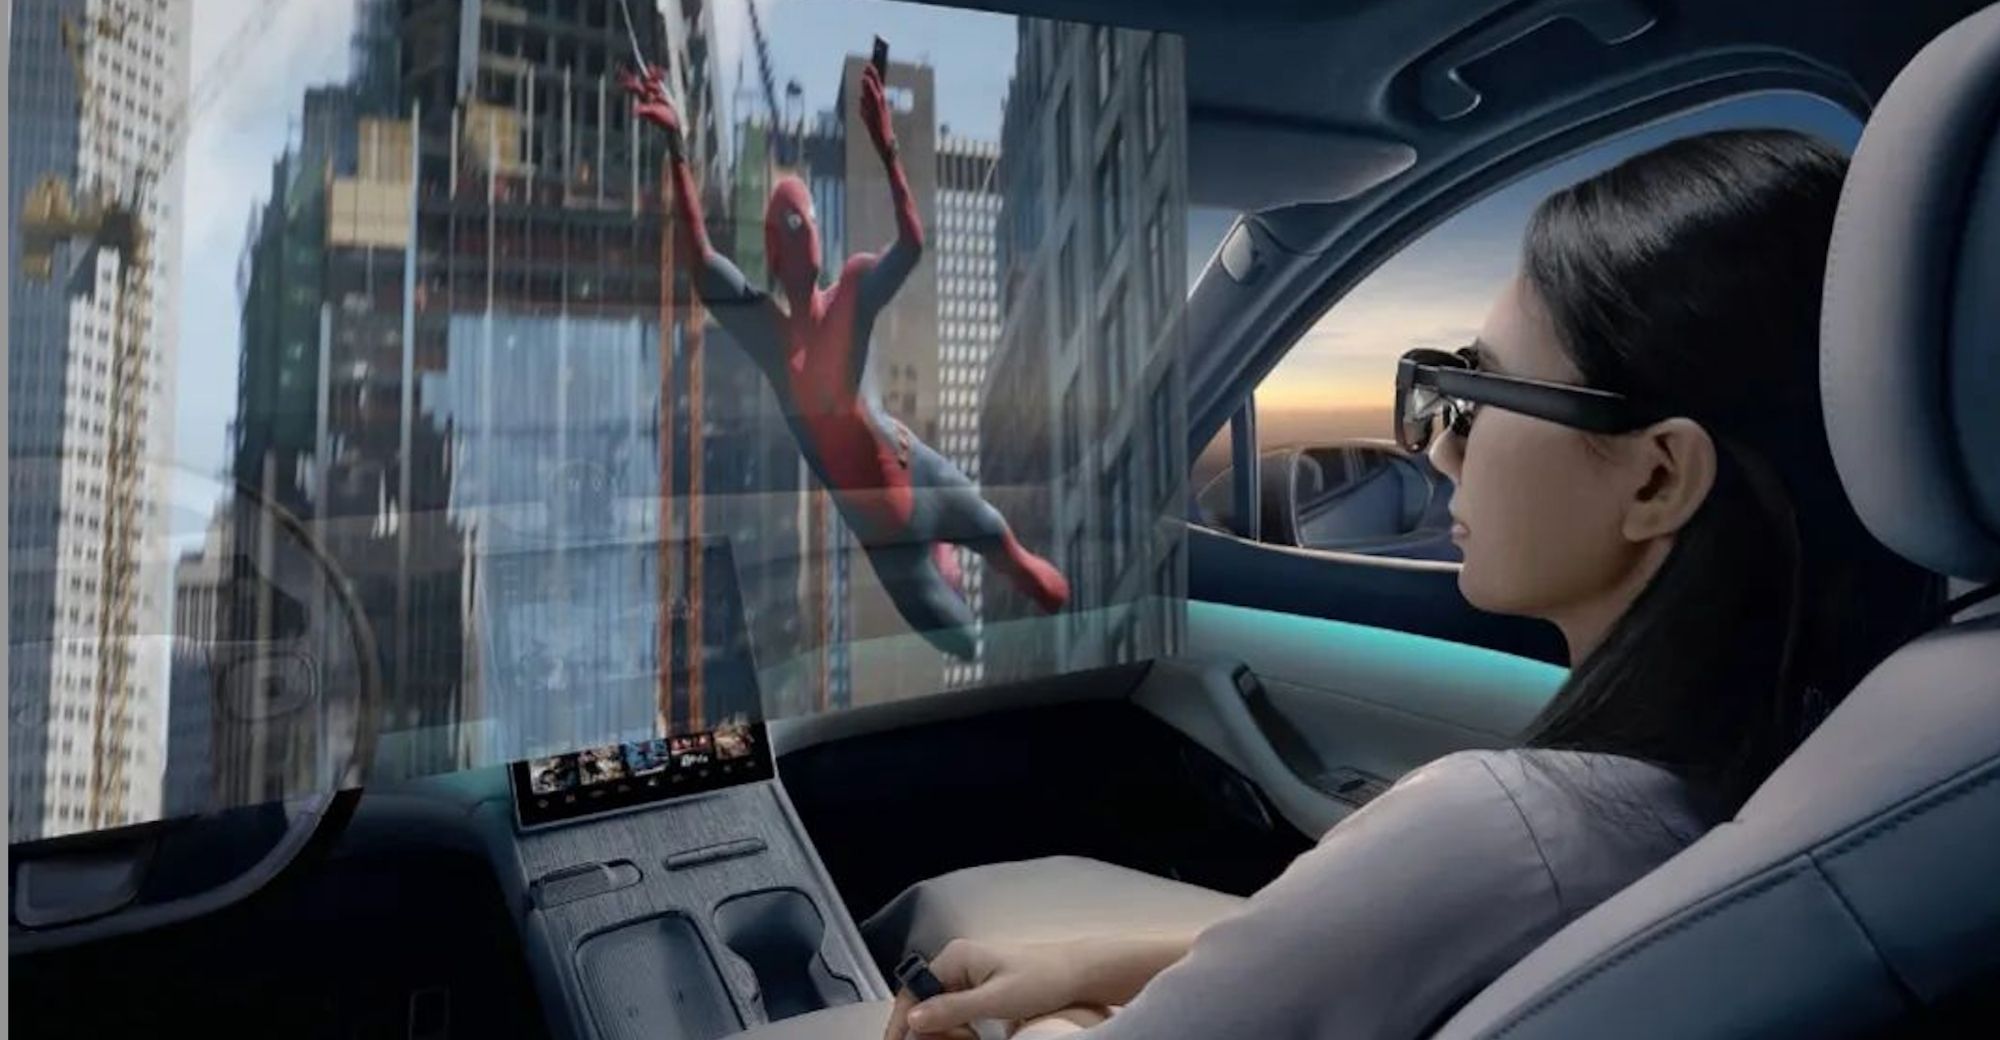 NIO เปิดตัวแว่นตา AR ในรถยนต์ที่พัฒนาร่วมกับ Nreal